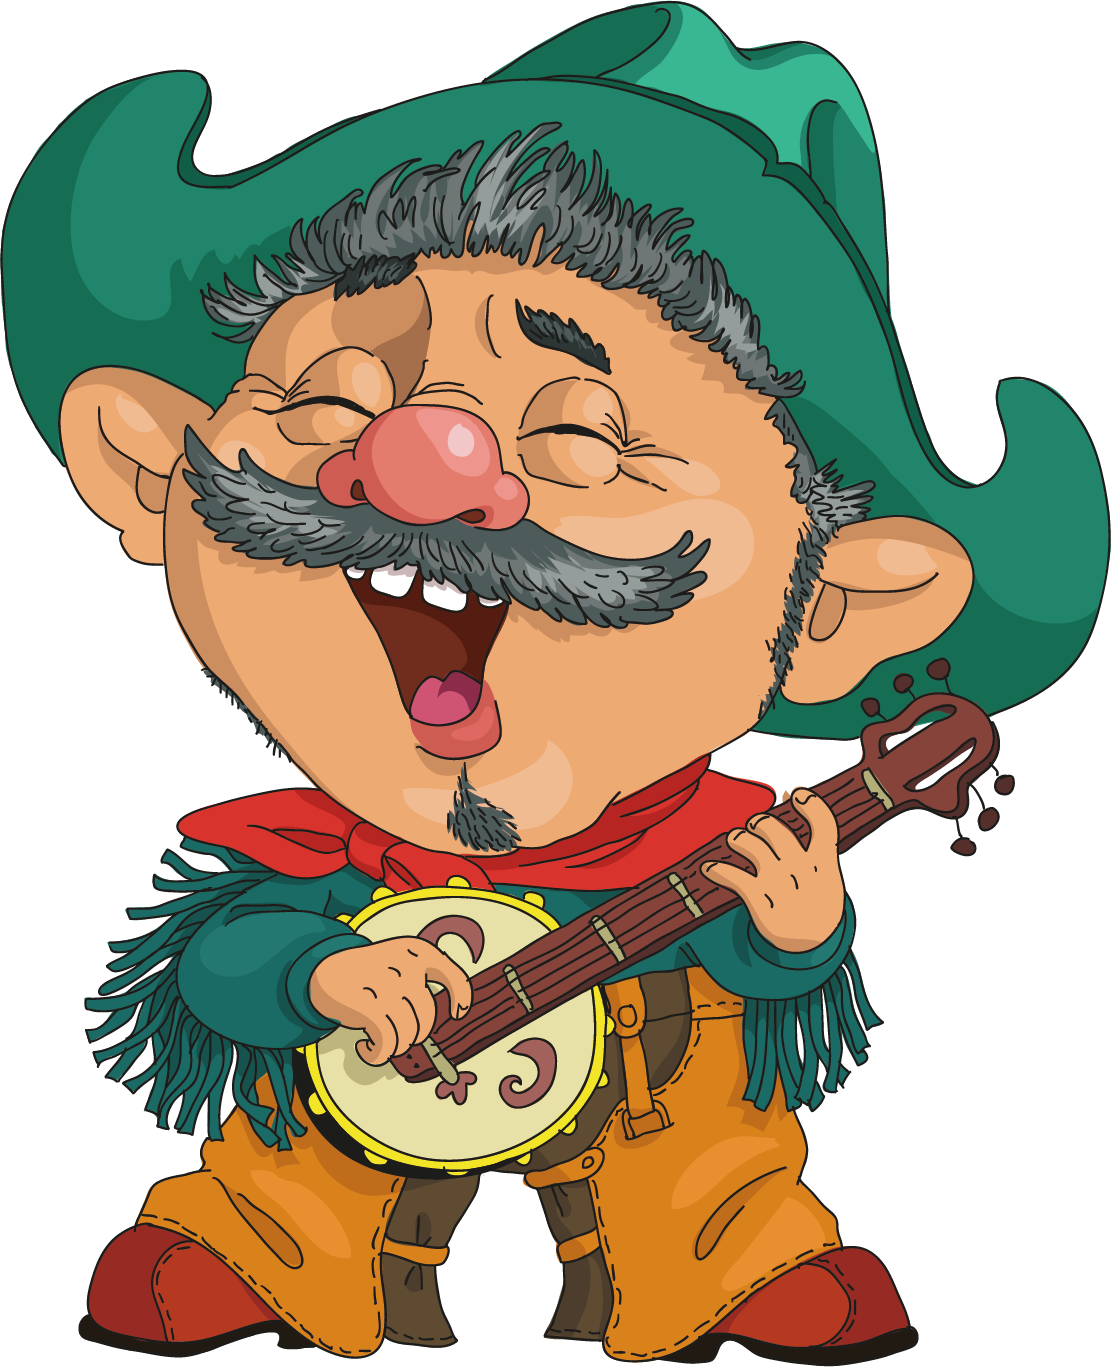 Old Cowboy Character Illustration Playing Guitar Cartoon Clipart